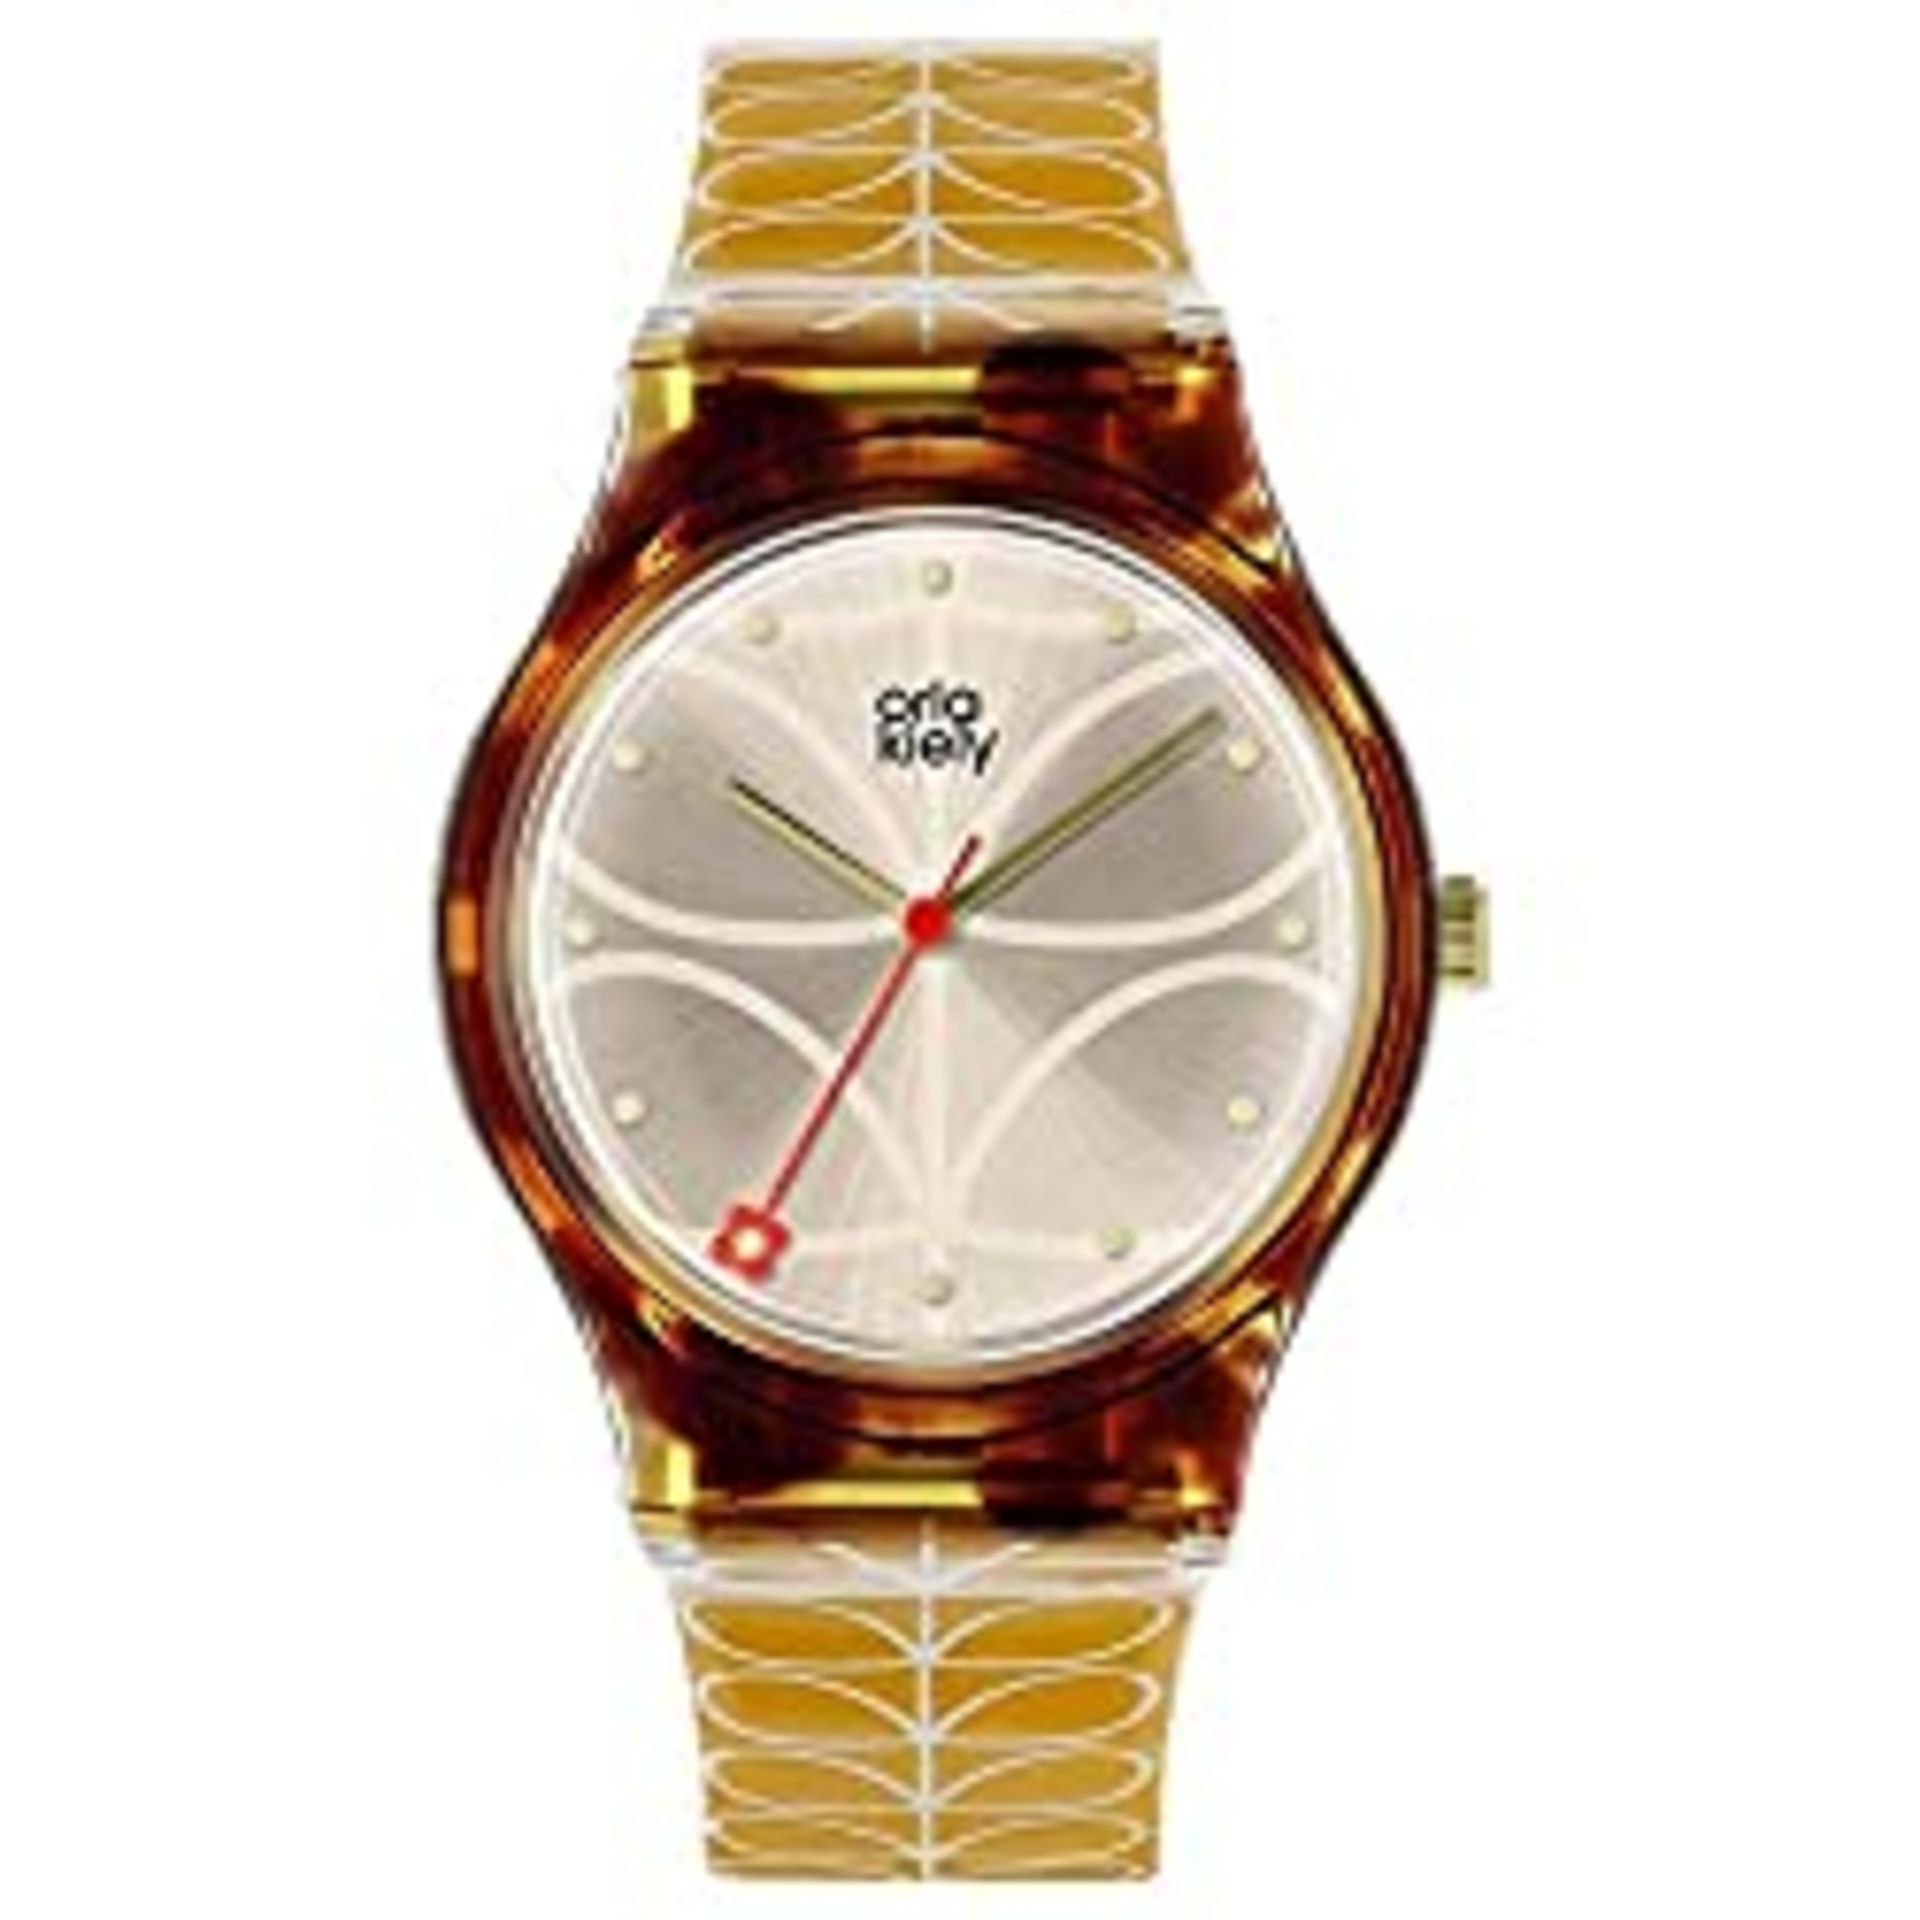 RRP £19.99 Orla Kiely Unisex Adult Analogue Classic Quartz Watch with Plastic Strap OK2222